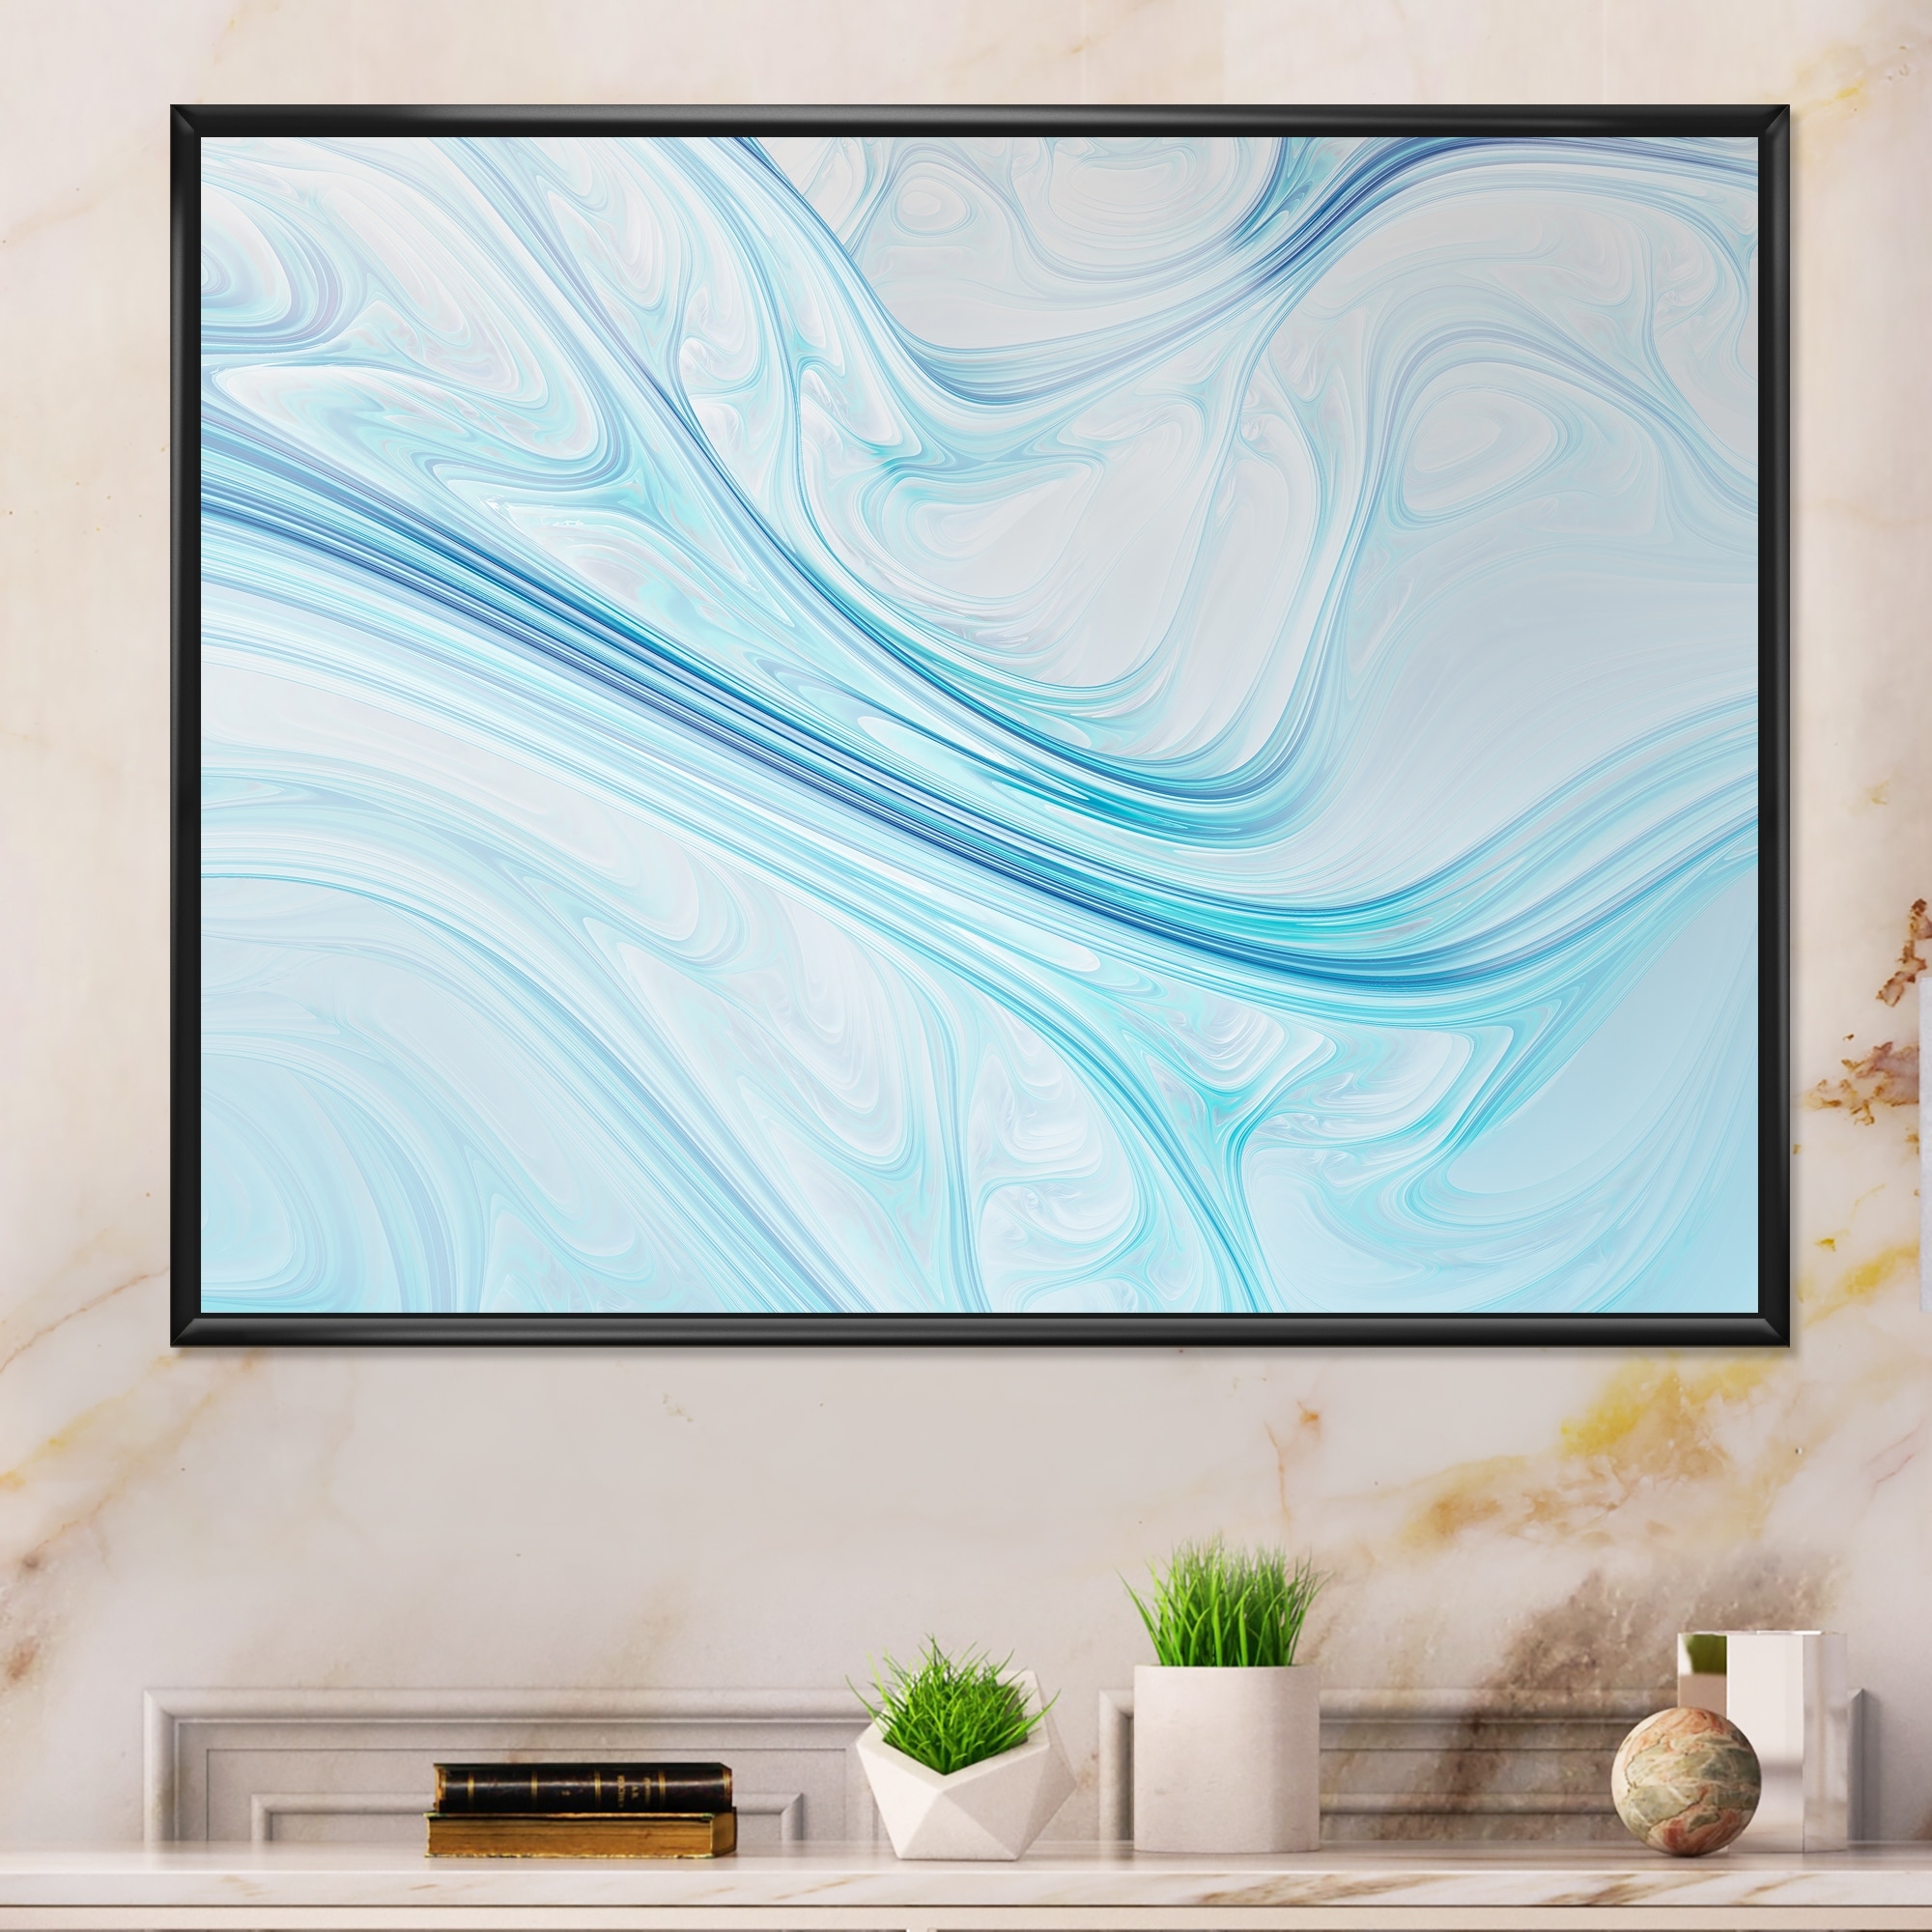 Designart "Surreal Marble Blue Wave" Modern Framed Canvas Wall Art